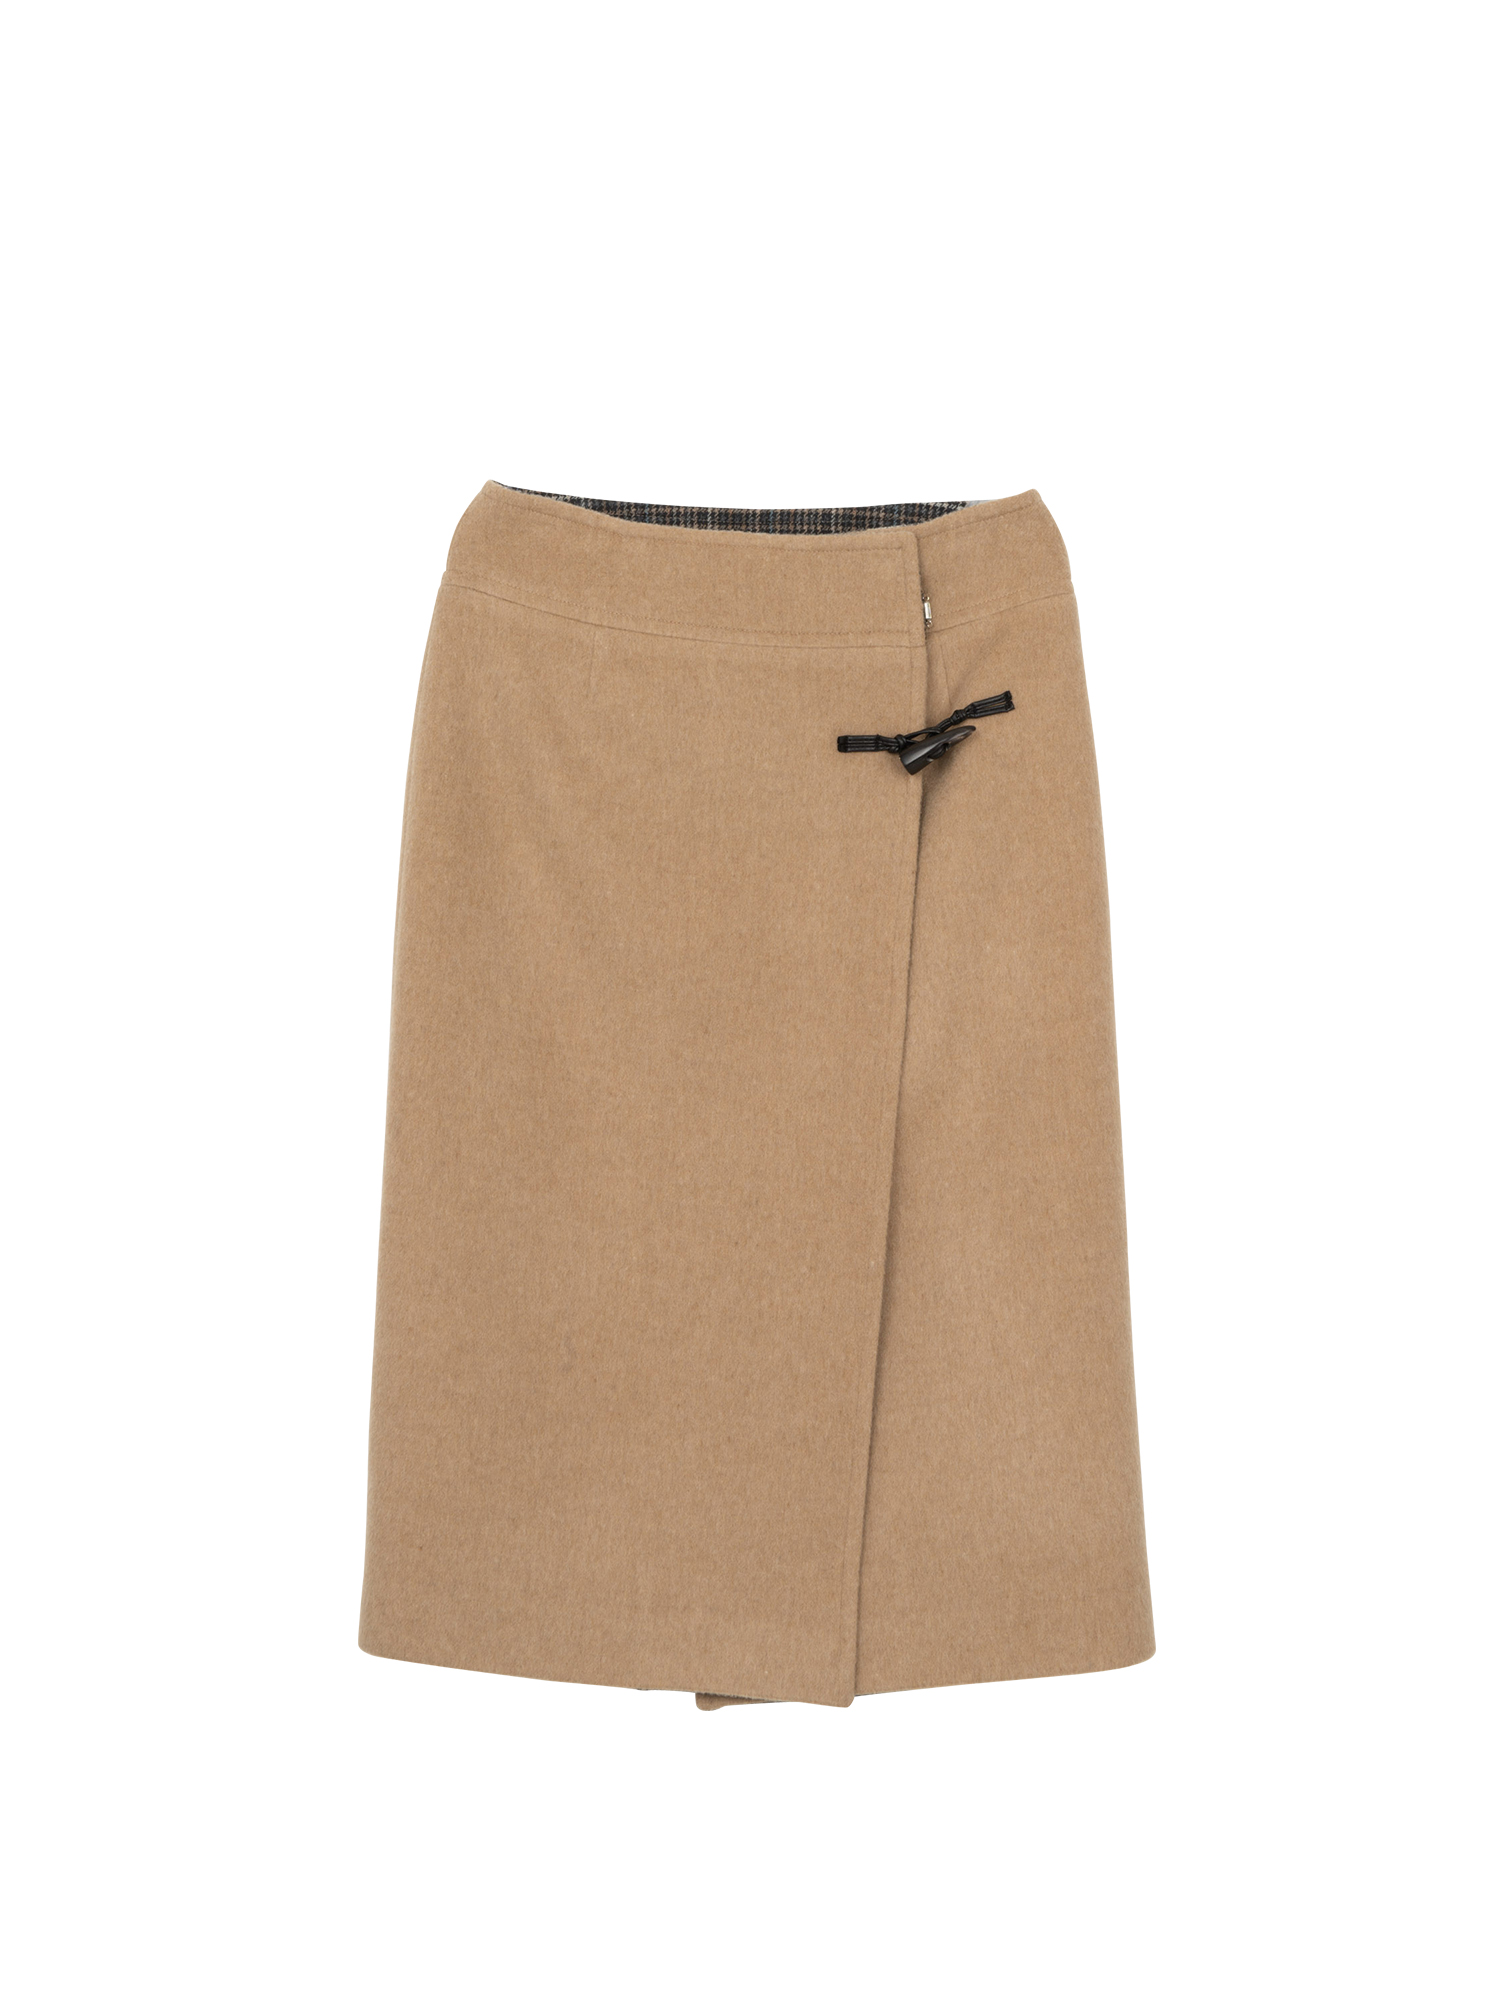 Duffle Wrap Skirt - Camel Beige